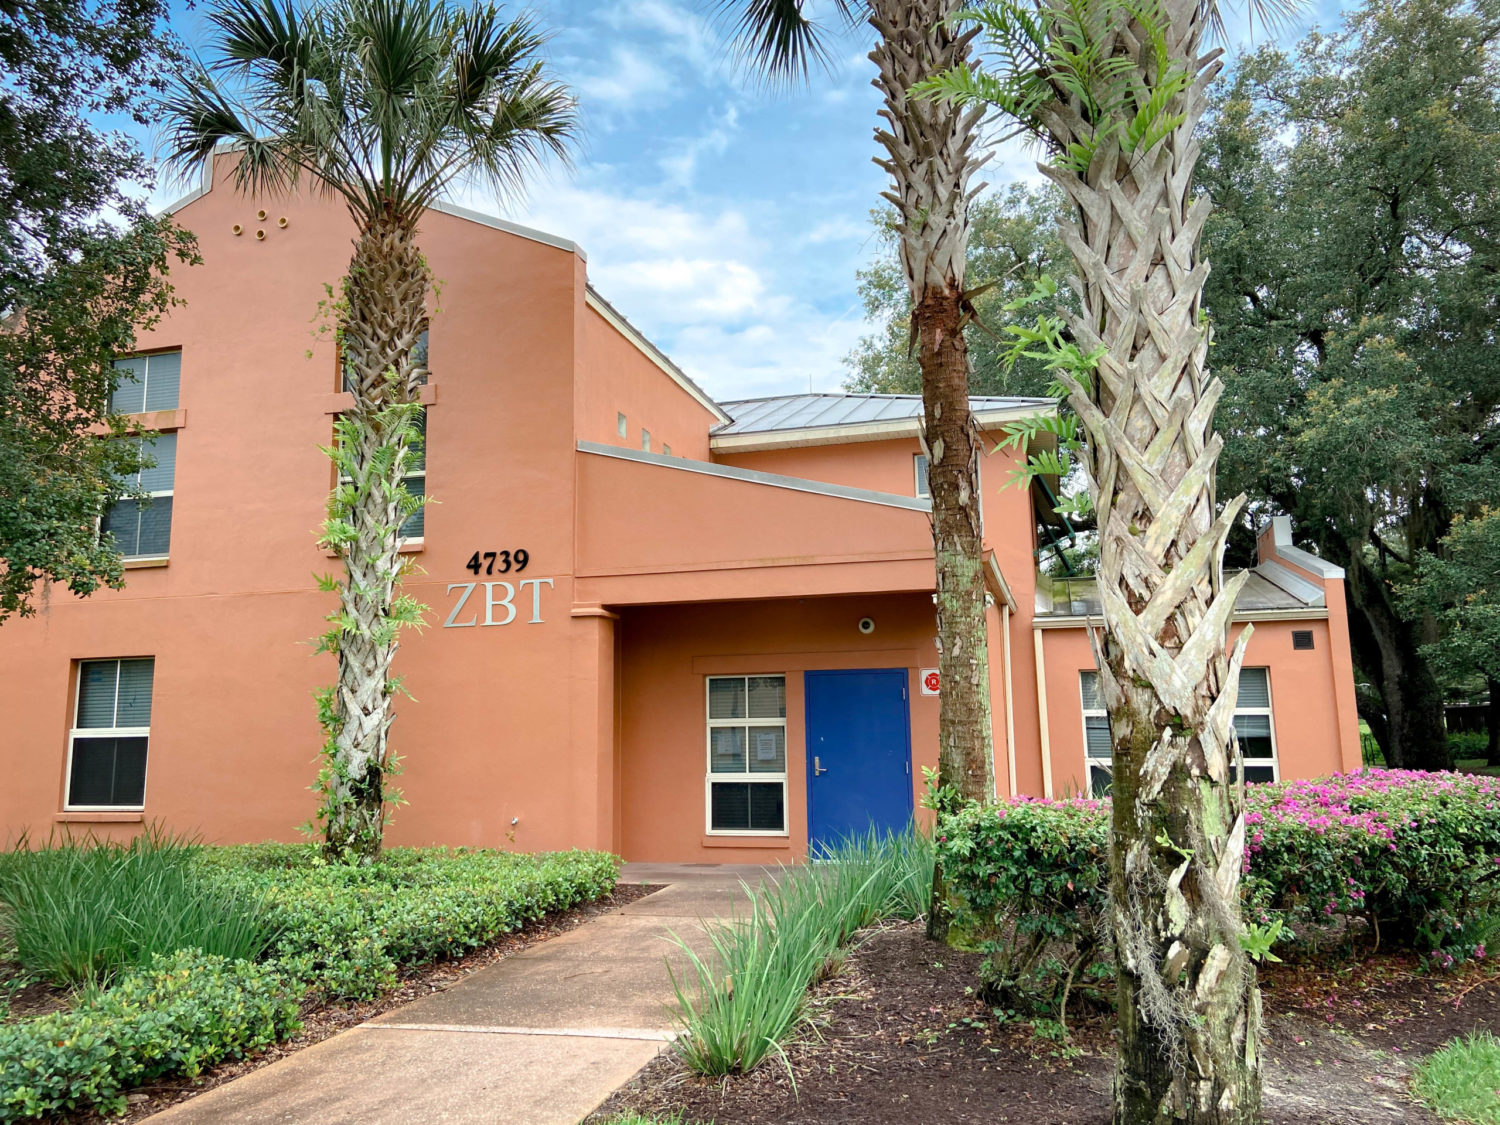 University of South Florida Zeta Beta Tau Fraternity House Renovation